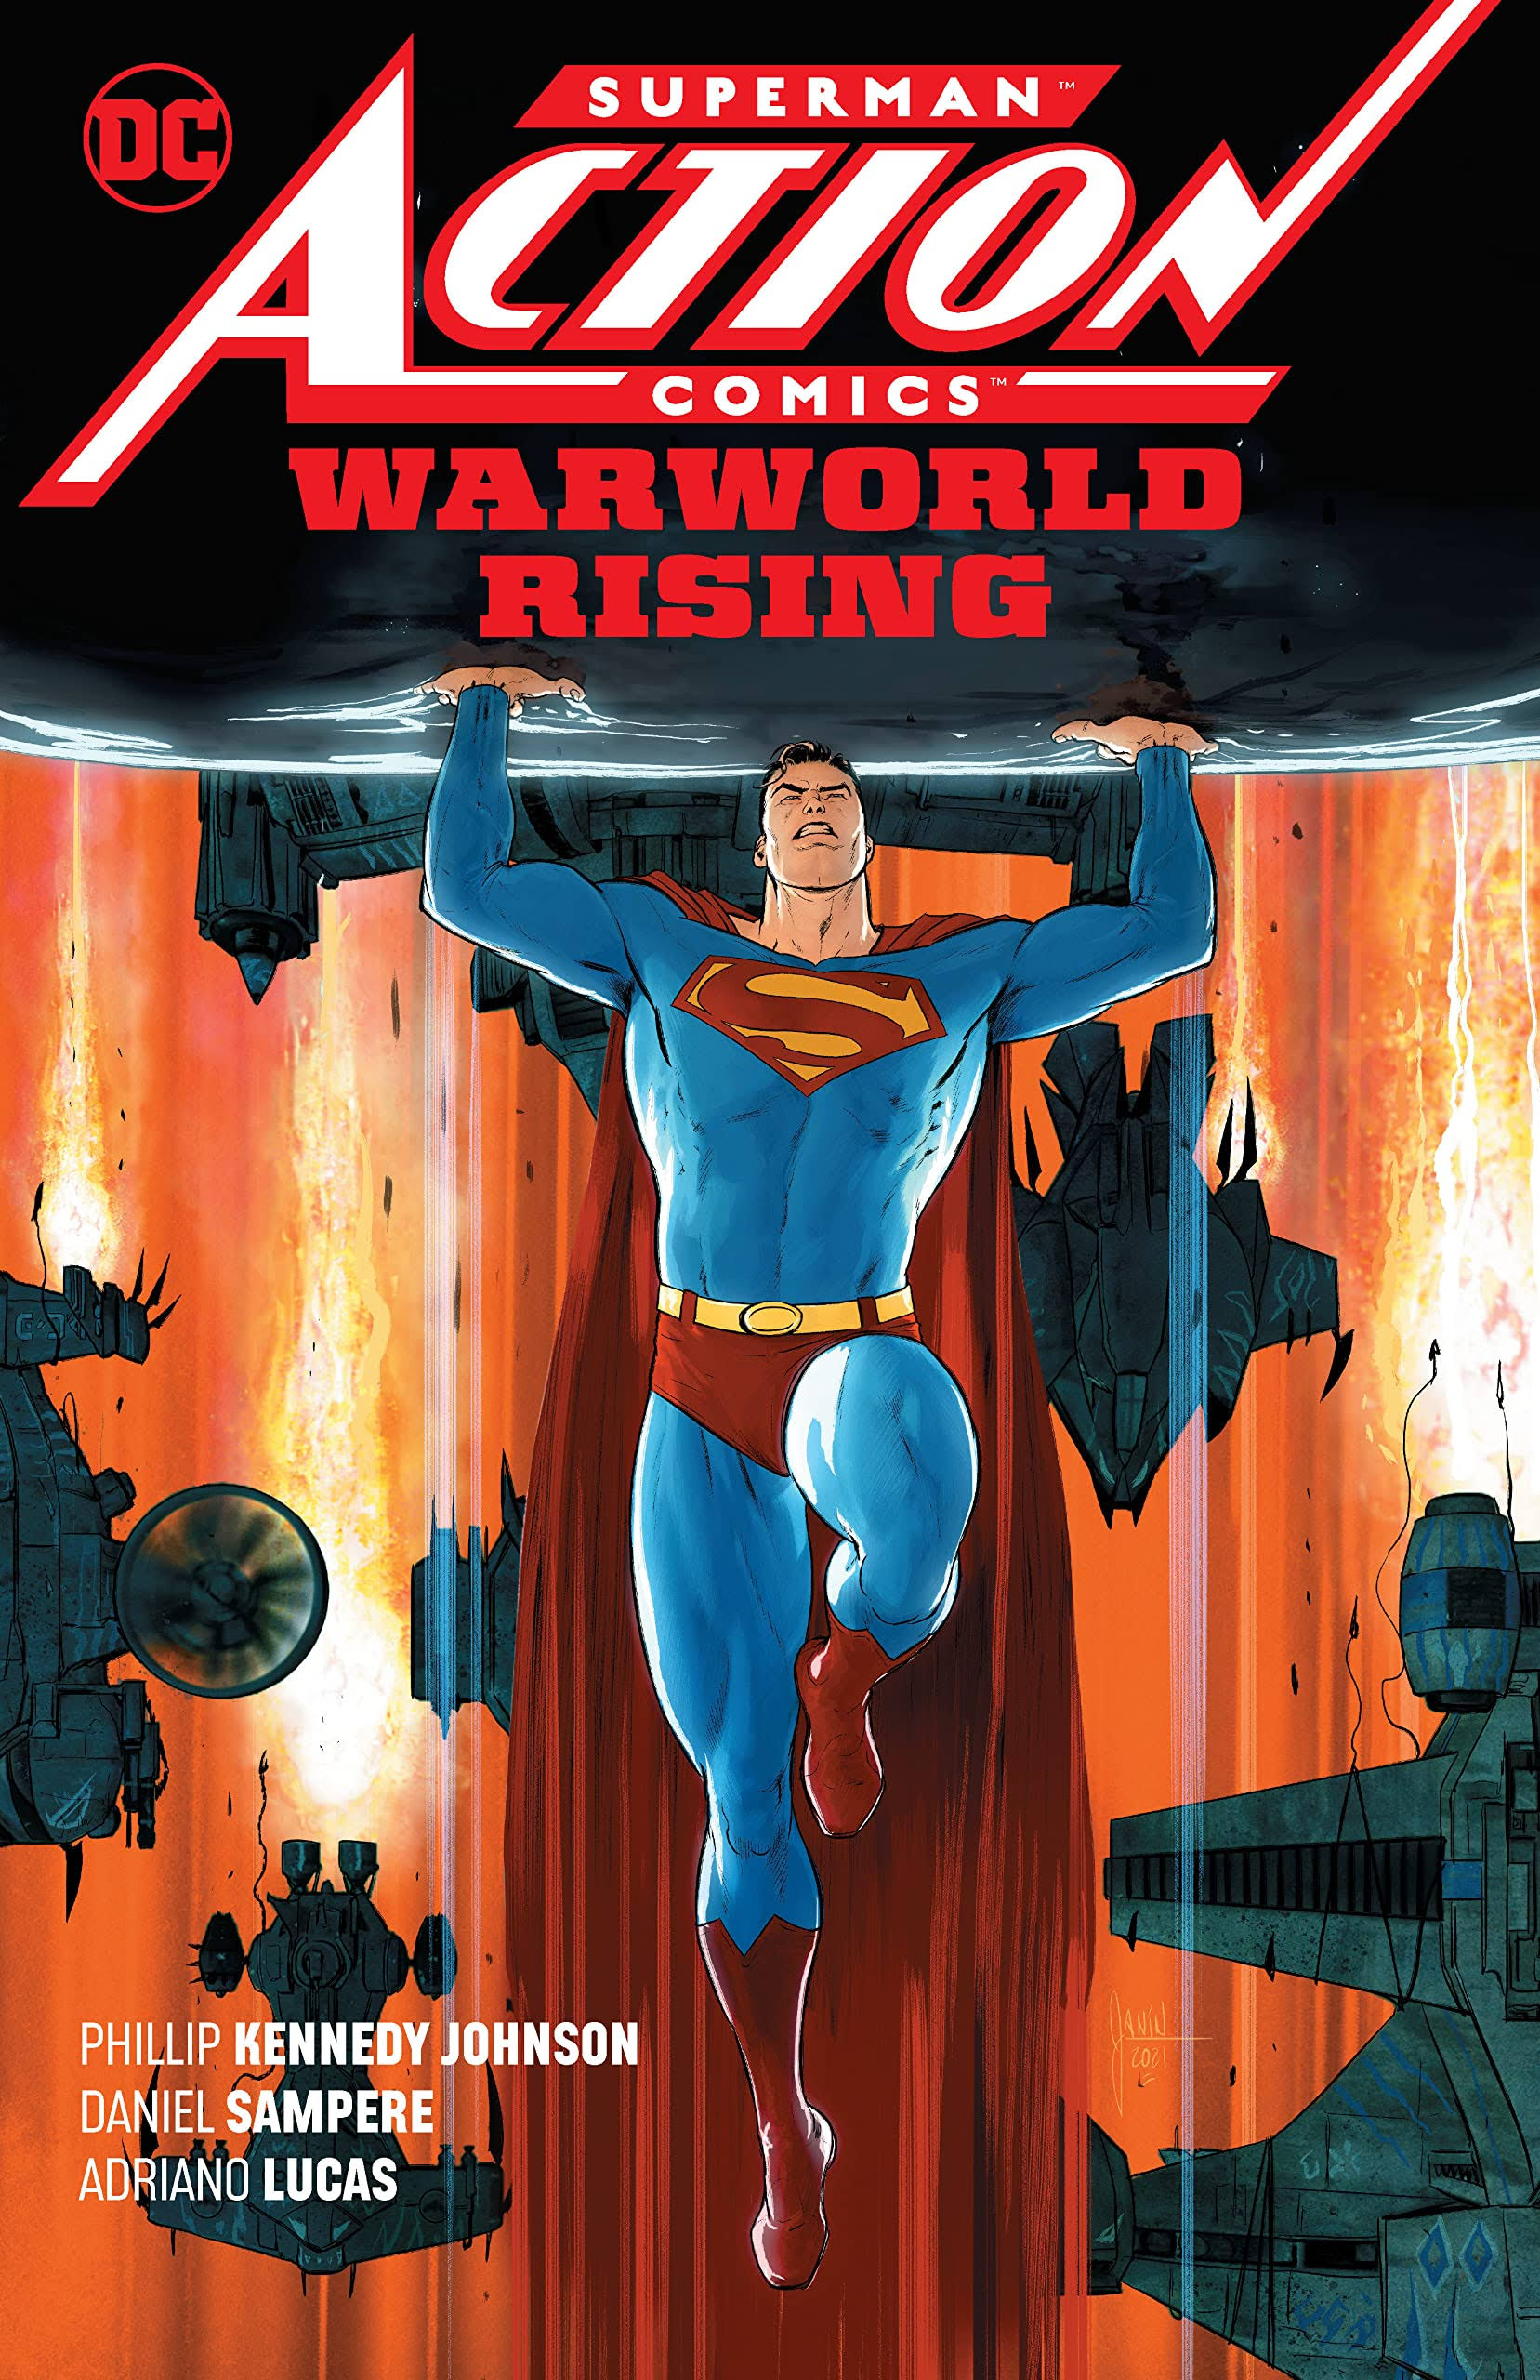 Superman: Action Comics Vol. 1: Warworld Rising [Book]